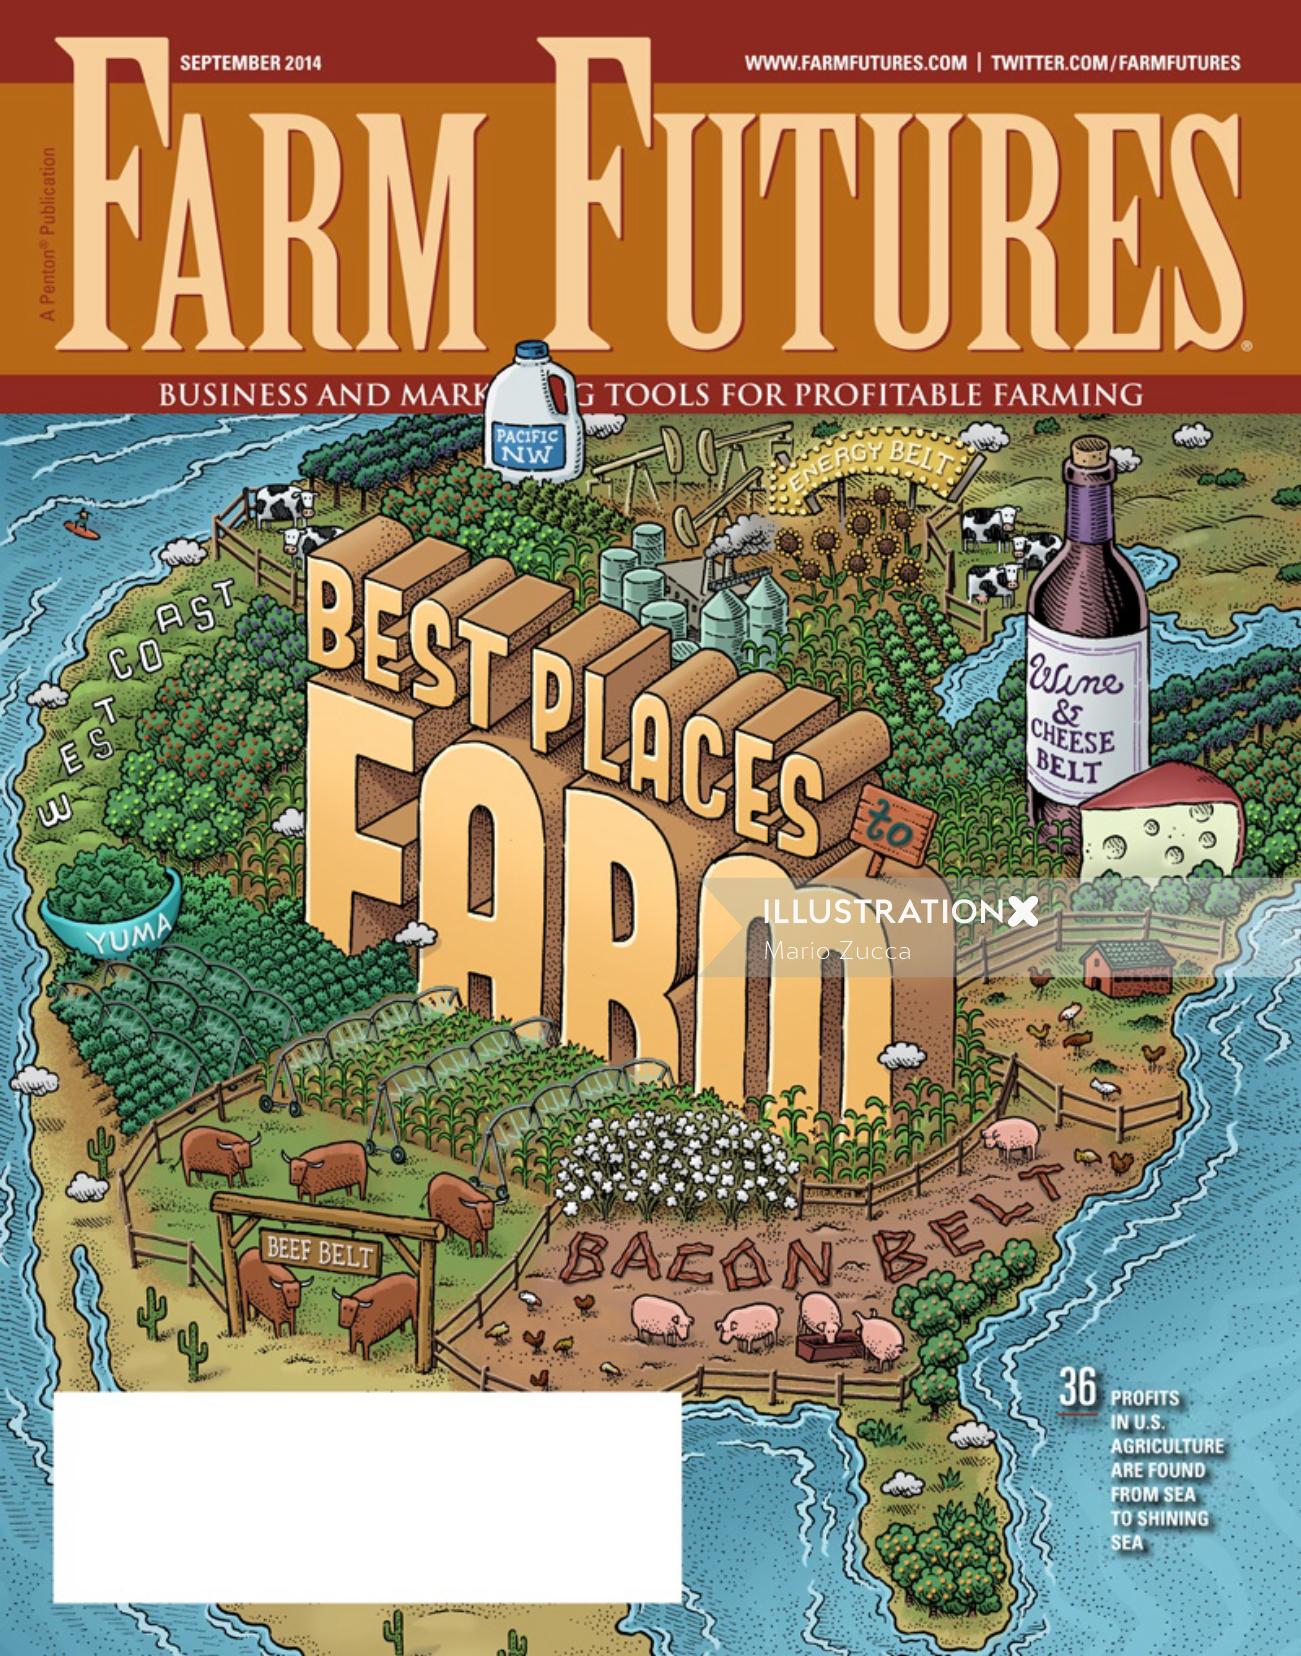 Farm futures magazine cover design